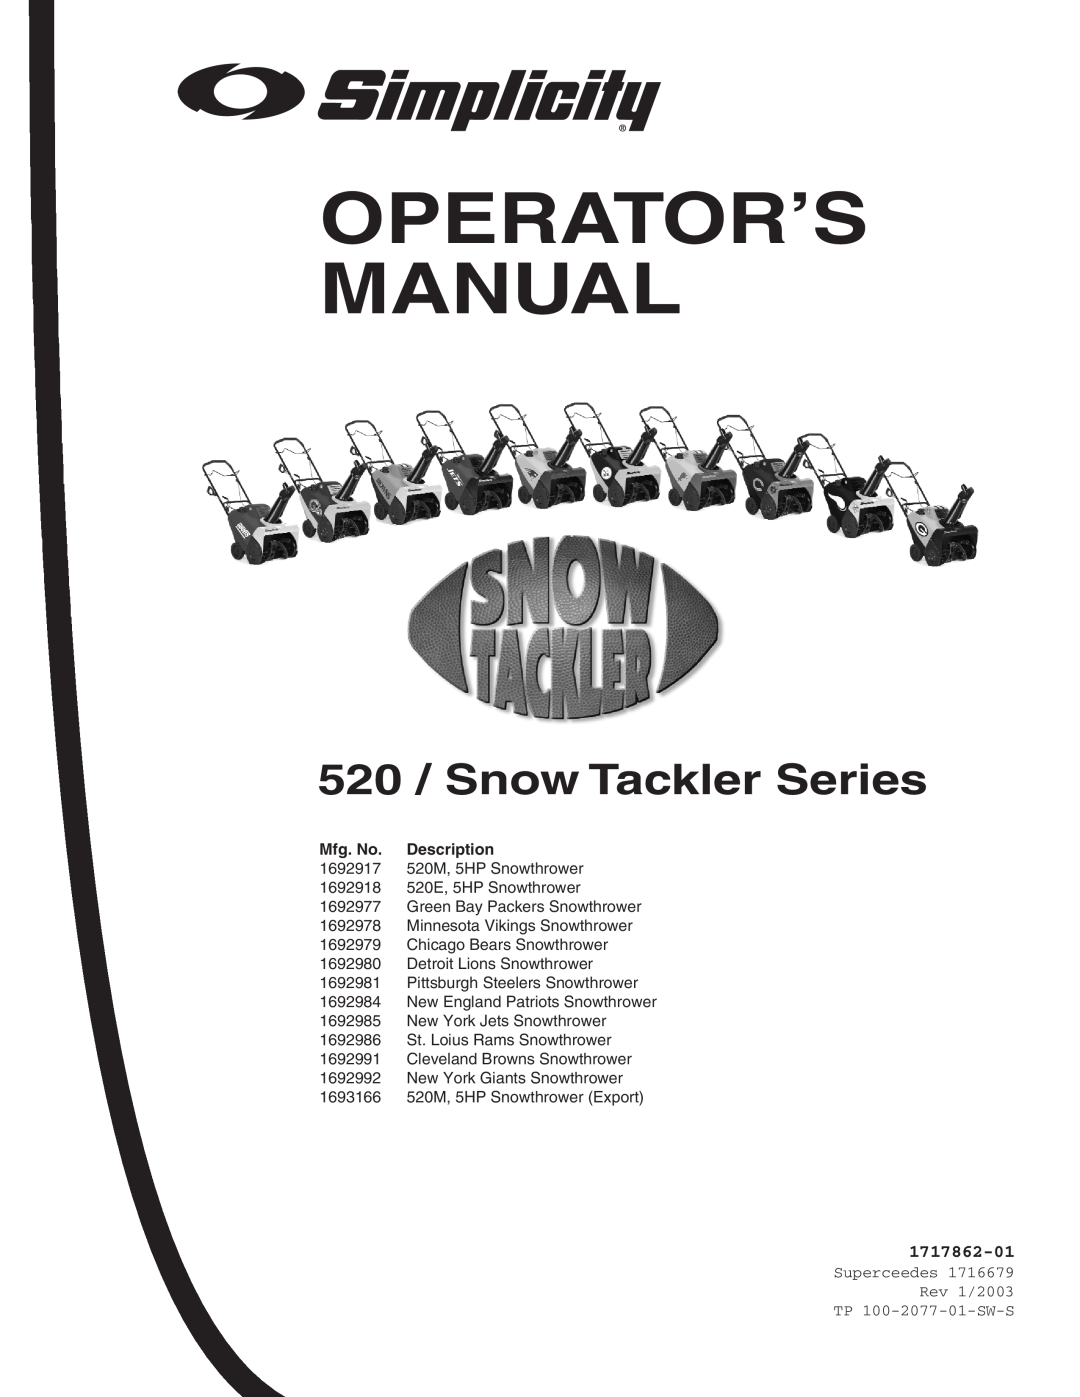 Simplicity 1692992, 1693166, 1692984, 1692986, 1692981, 1692977 manual Operator’S Manual, 520 / Snow Tackler Series, 1717862-01 